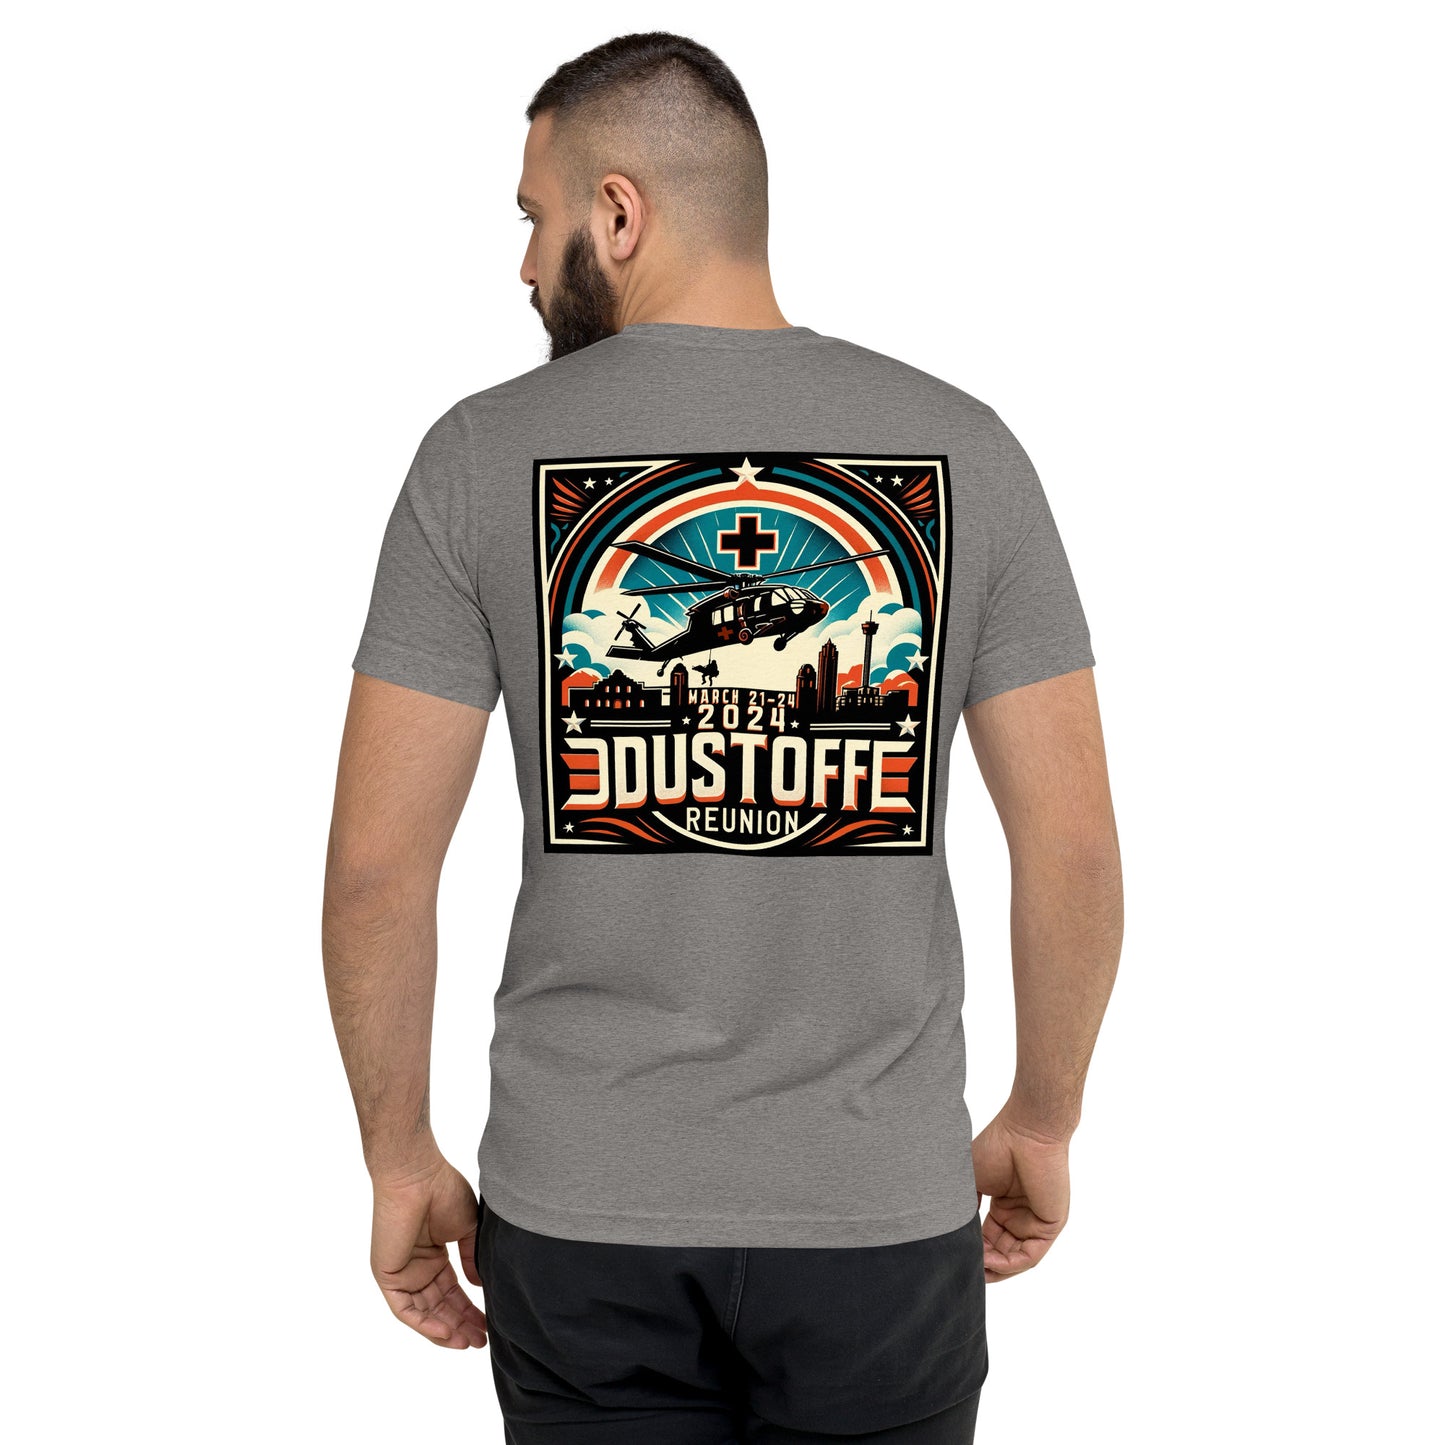 Hospitality Suite DUSTOFF Reunion (Black Font) Short sleeve t-shirt